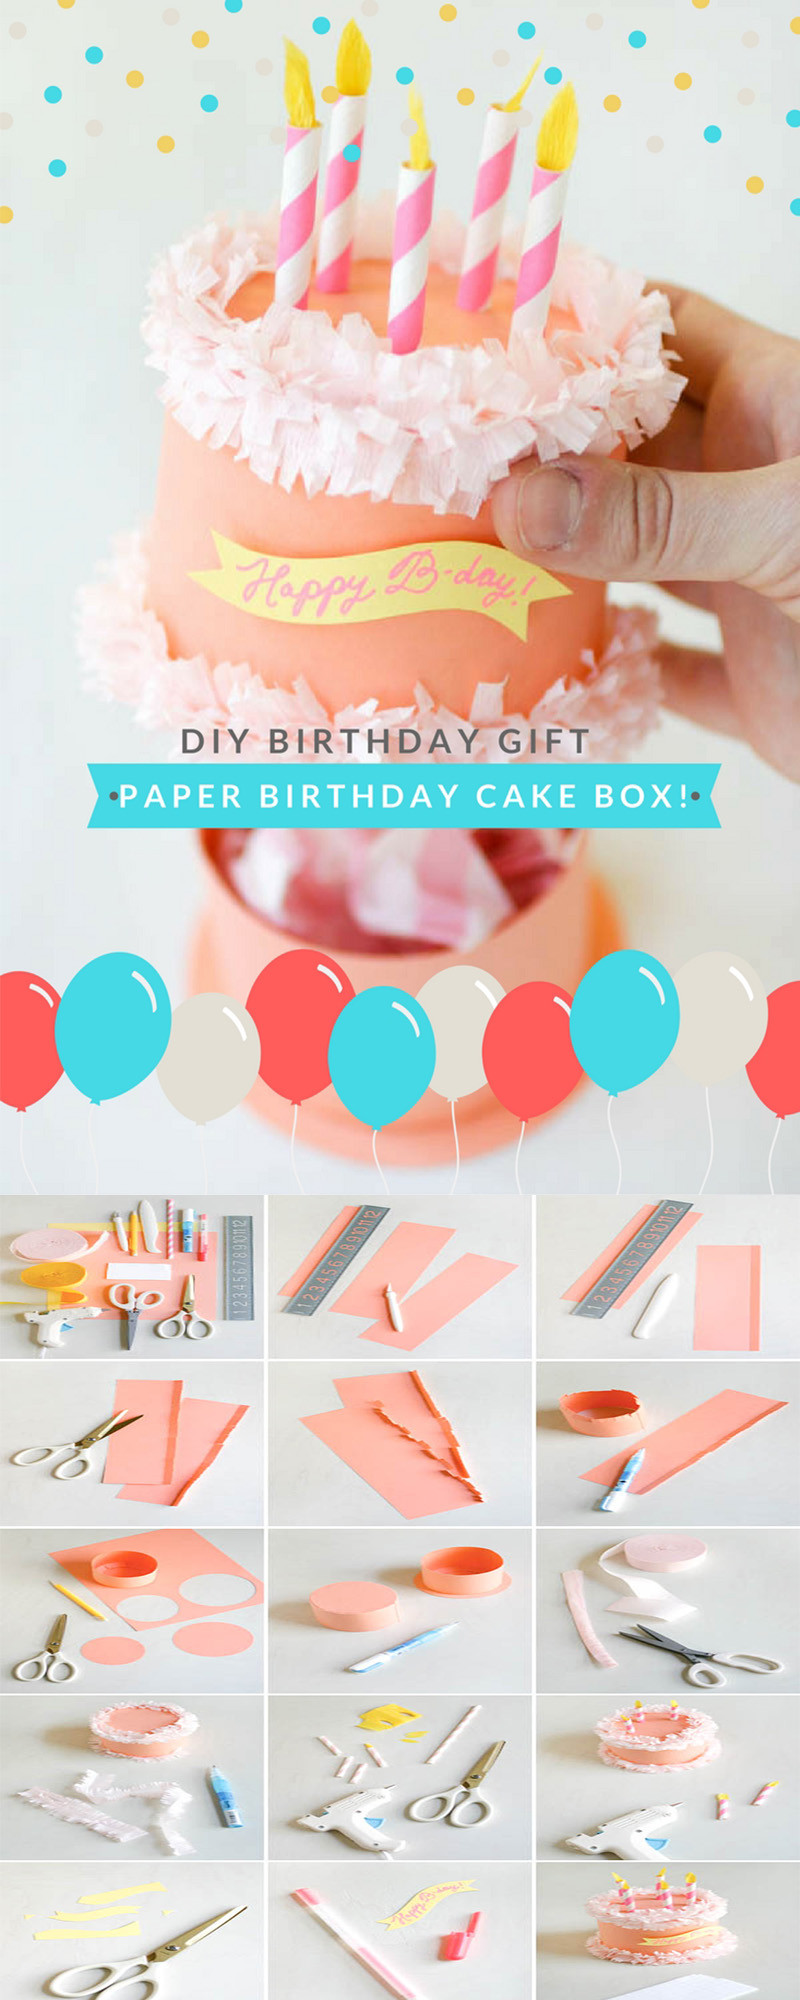 Birthday Diy Gifts
 DIY Gift Ideas for Your Boyfriend Paper Birthday Cake Box